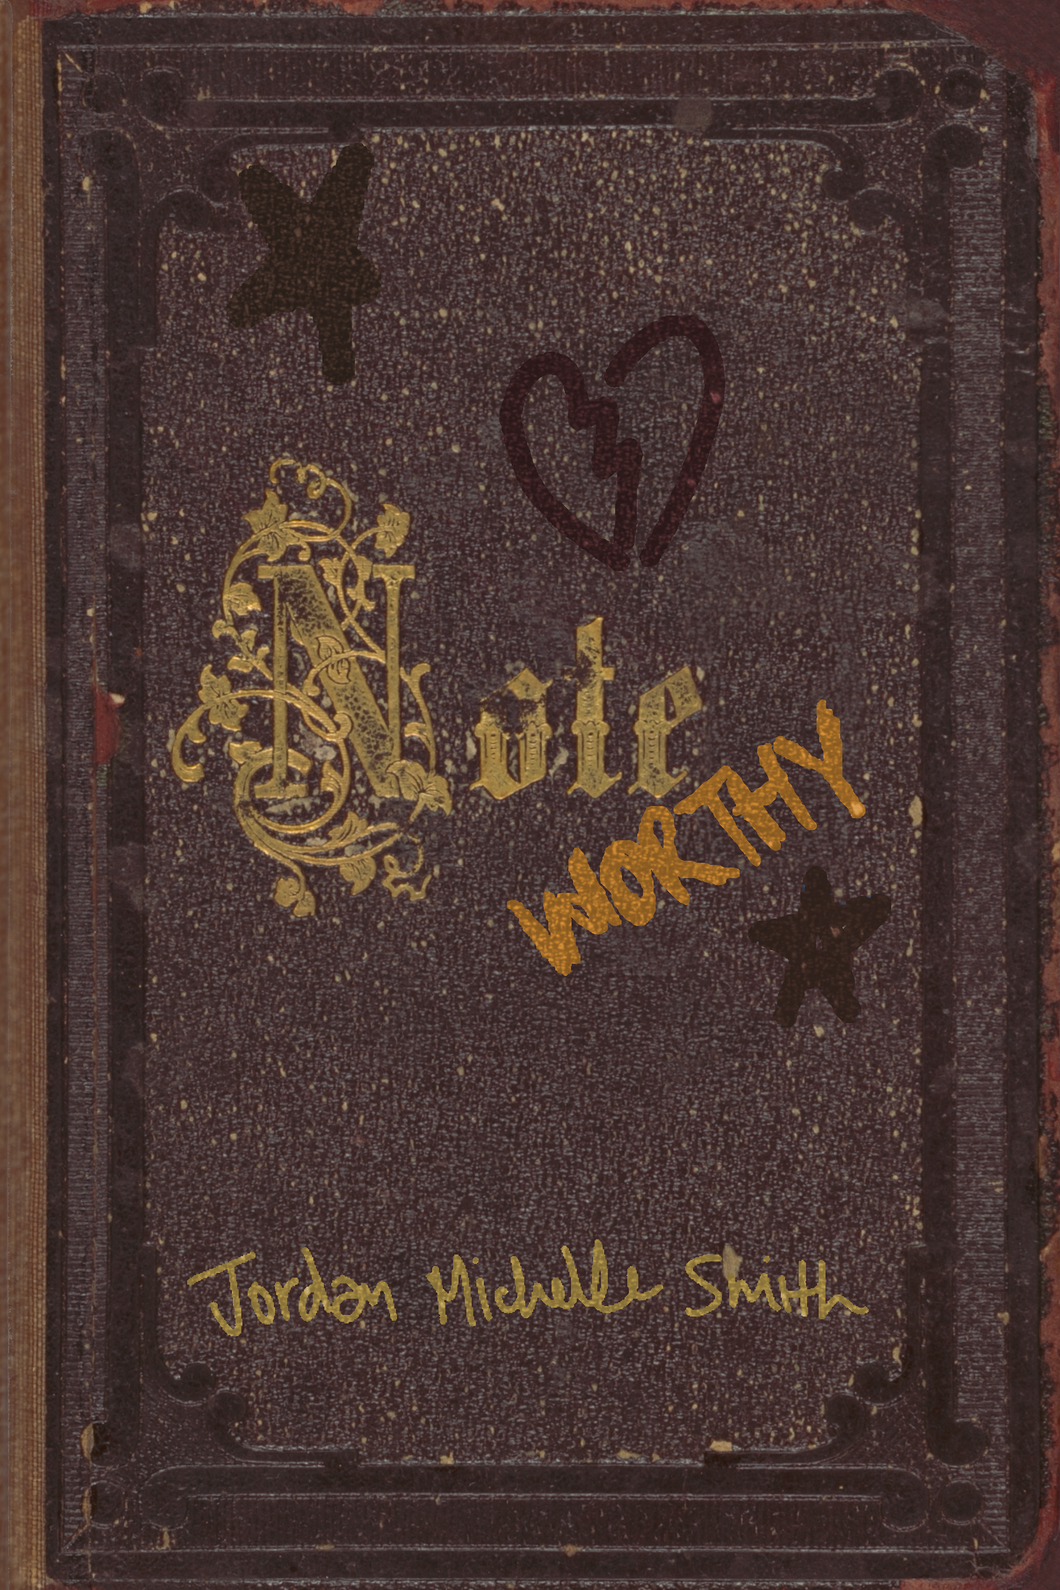 NoteWorthy, by Jordan Michelle Smith-Print Books-Bottlecap Press